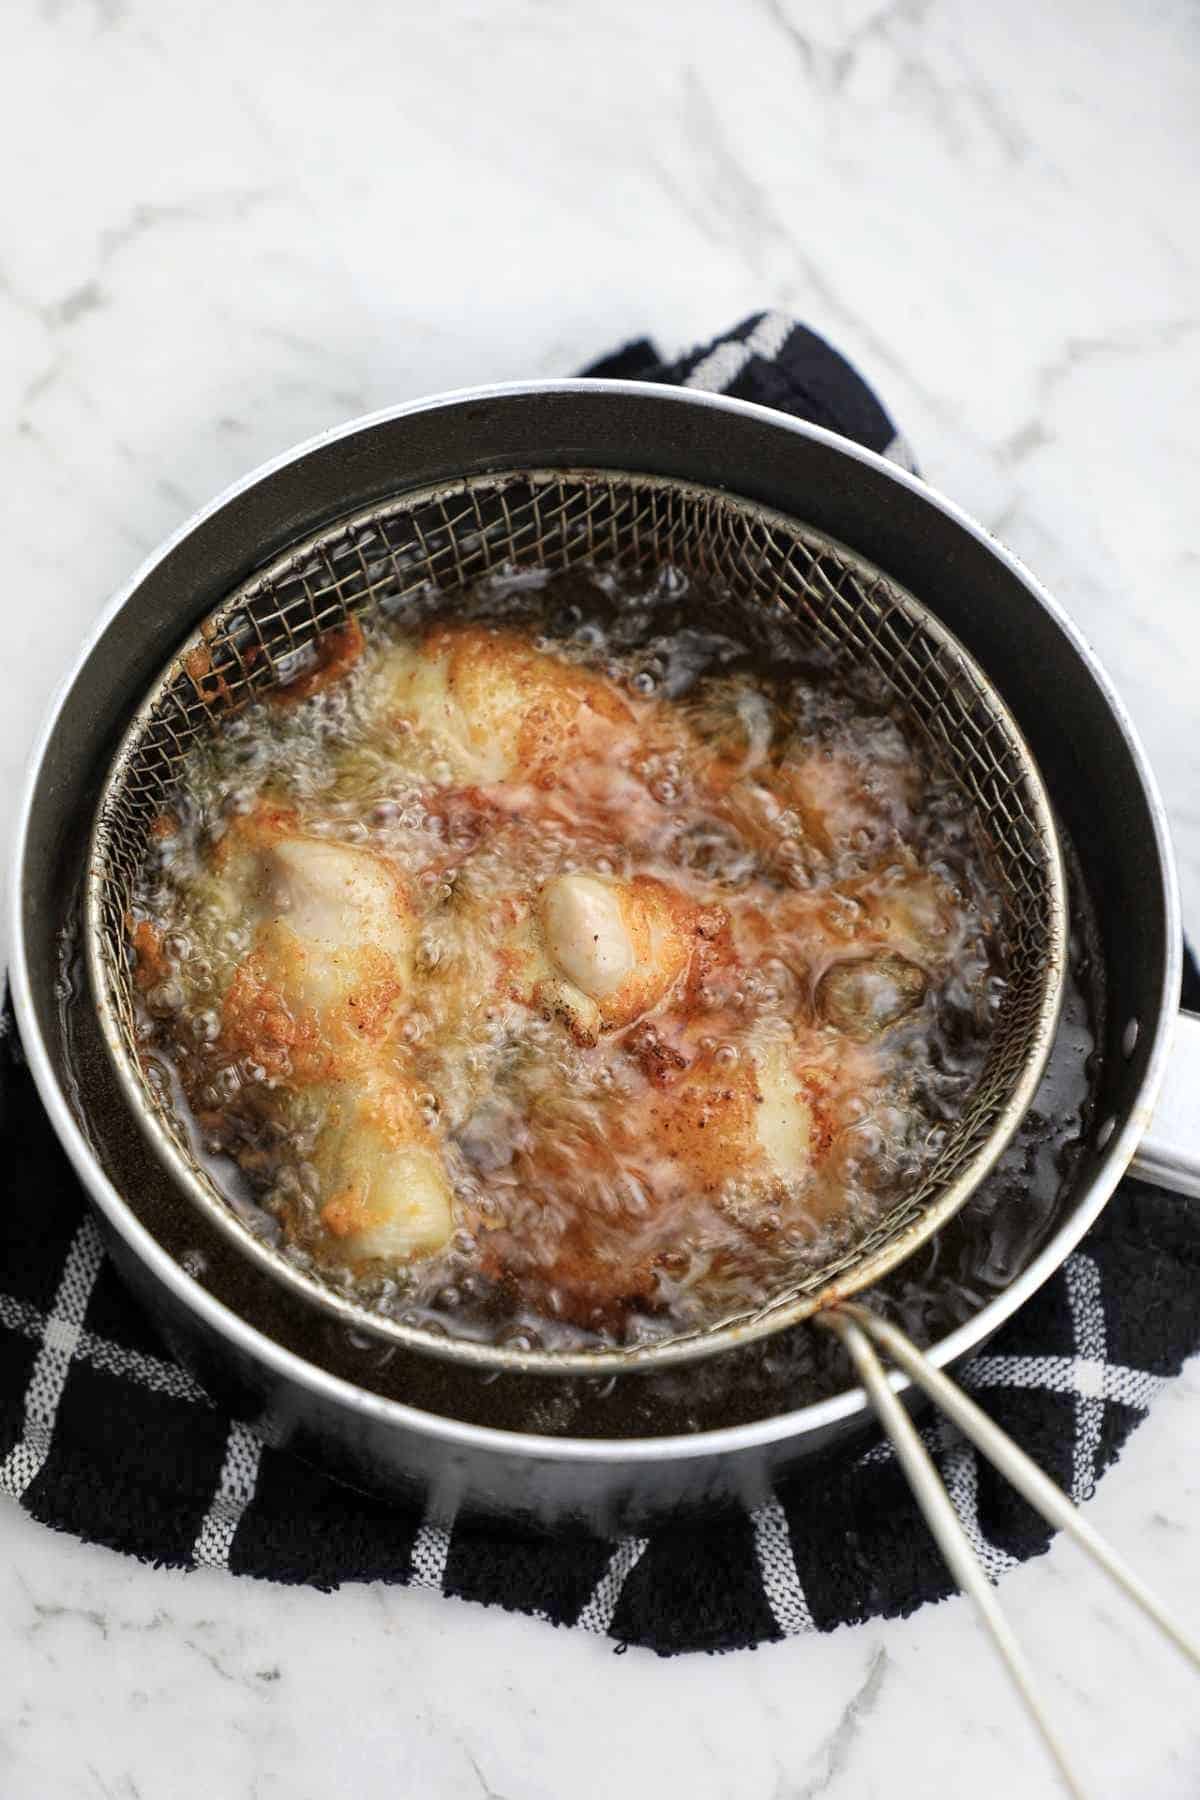 frying chicken legs in a chip pan.